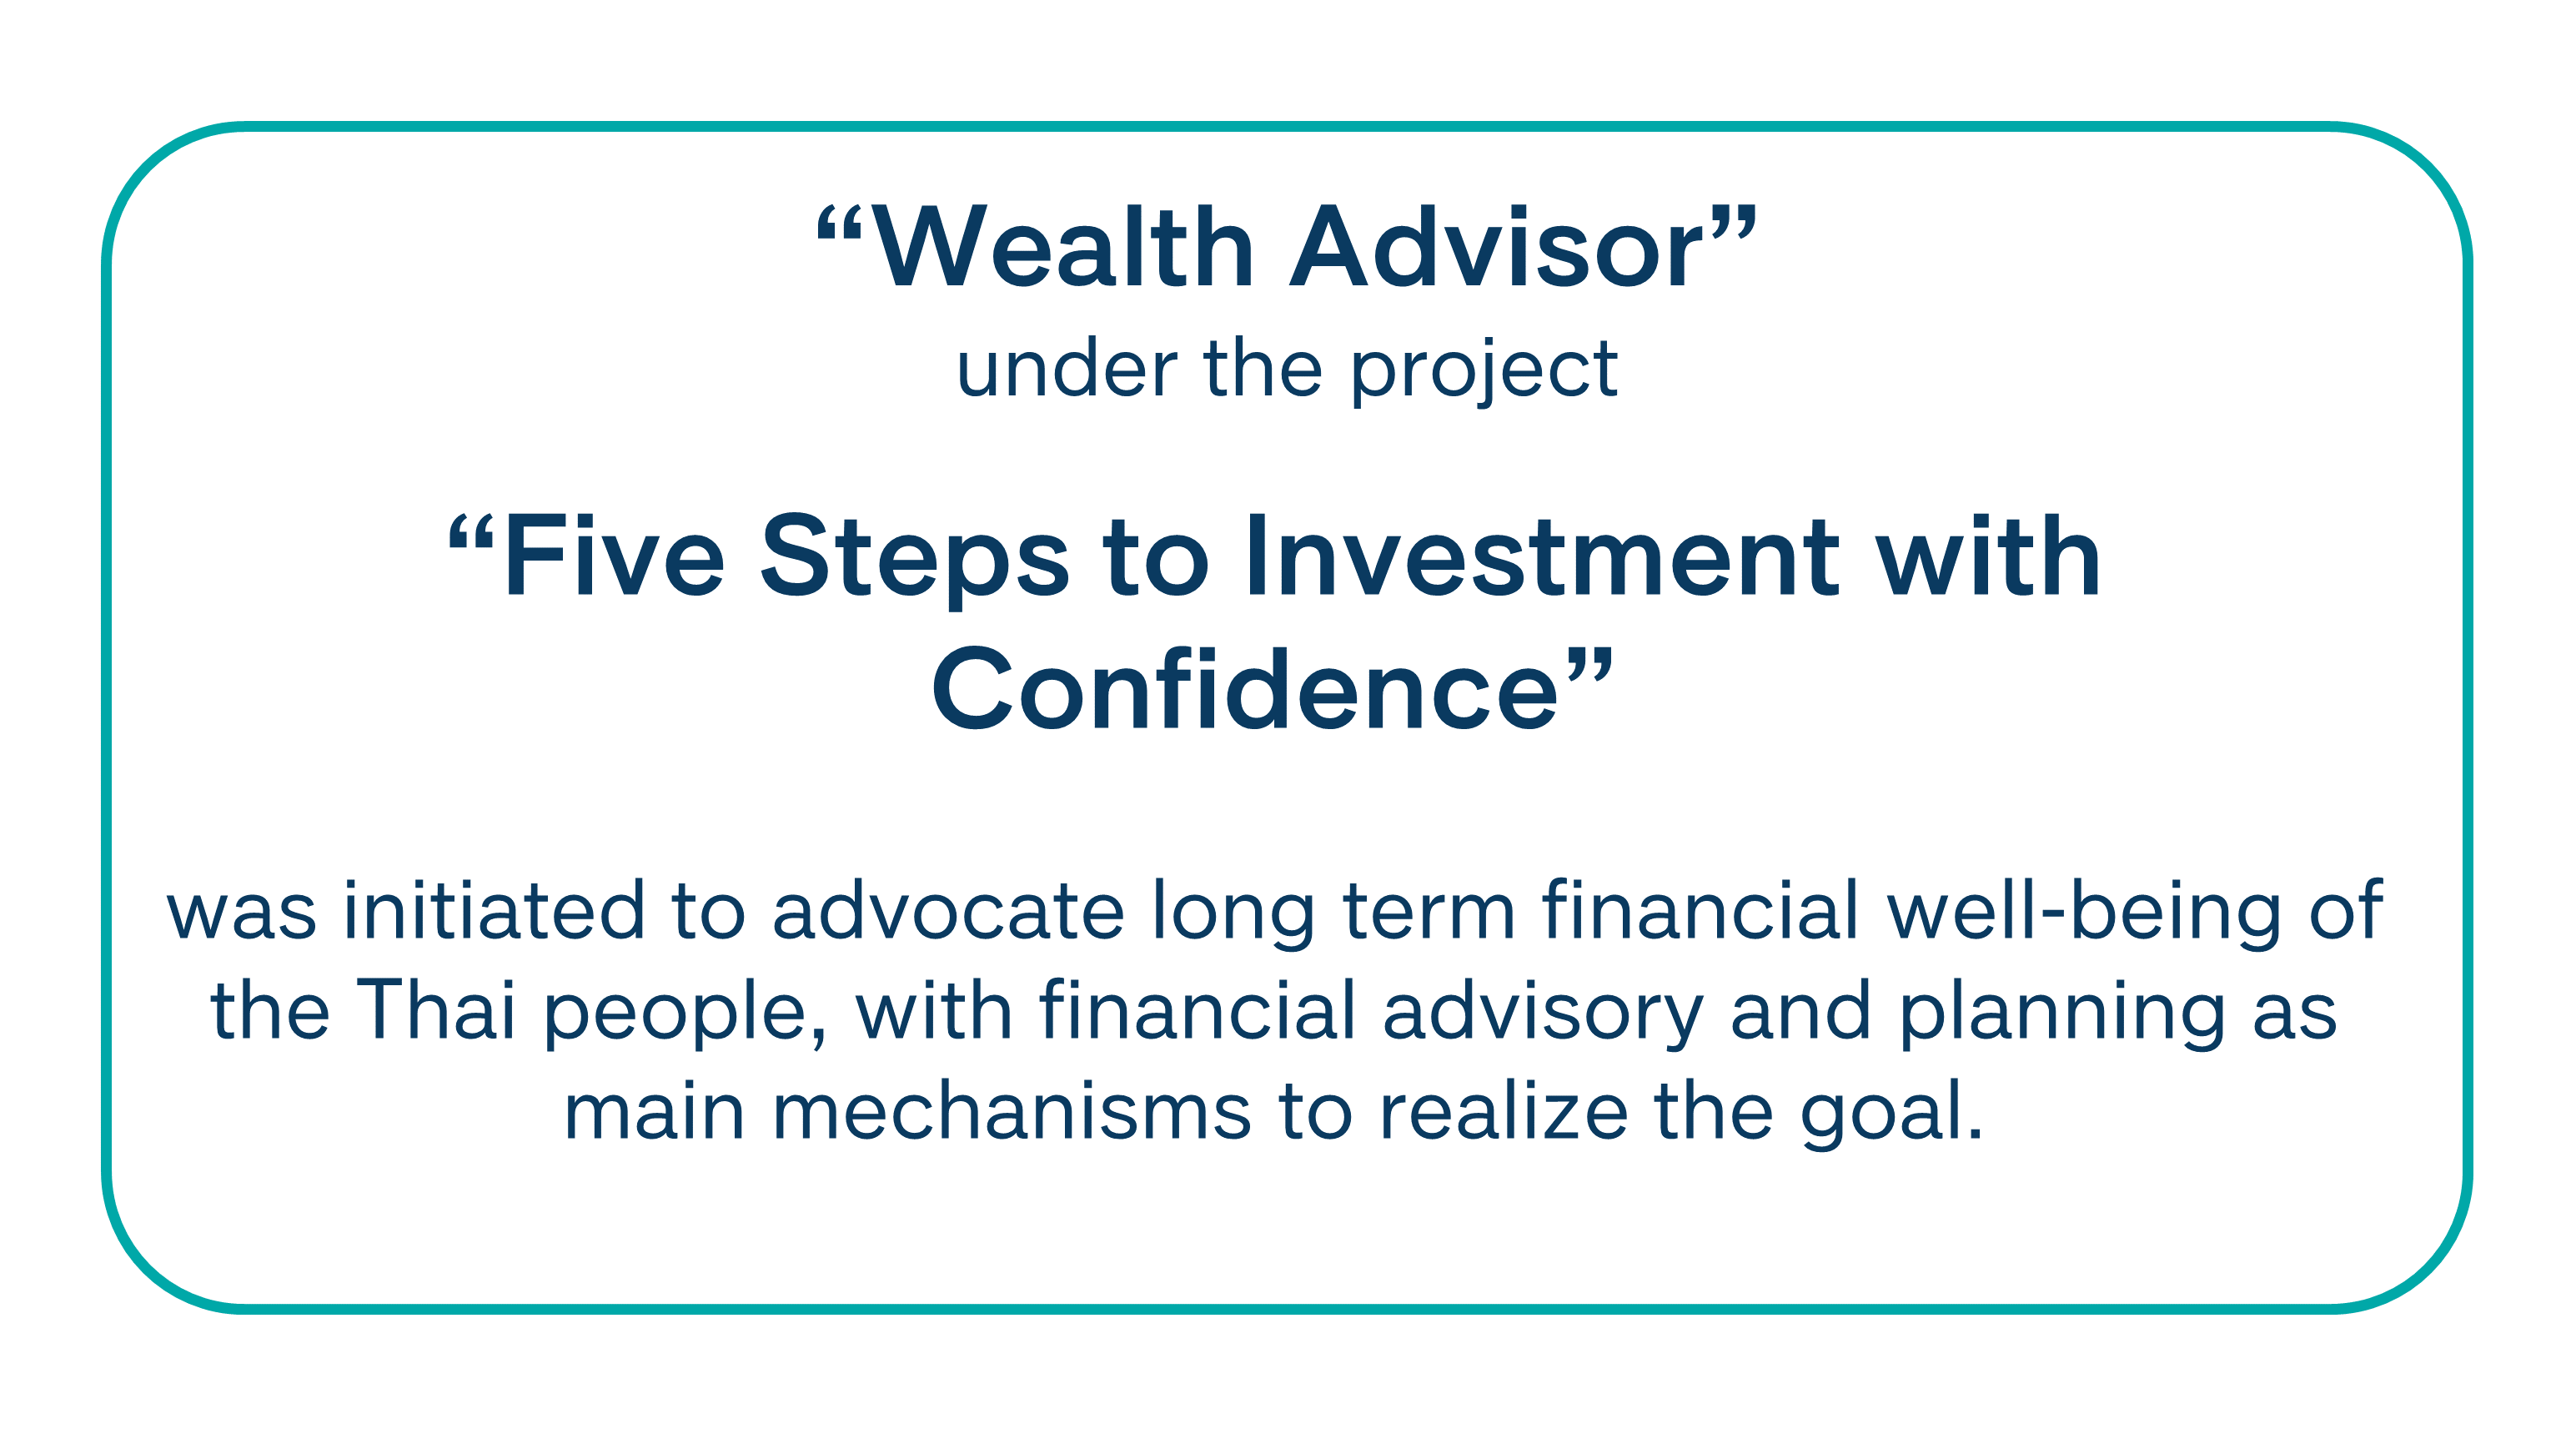 wealth advice_1_edit.png